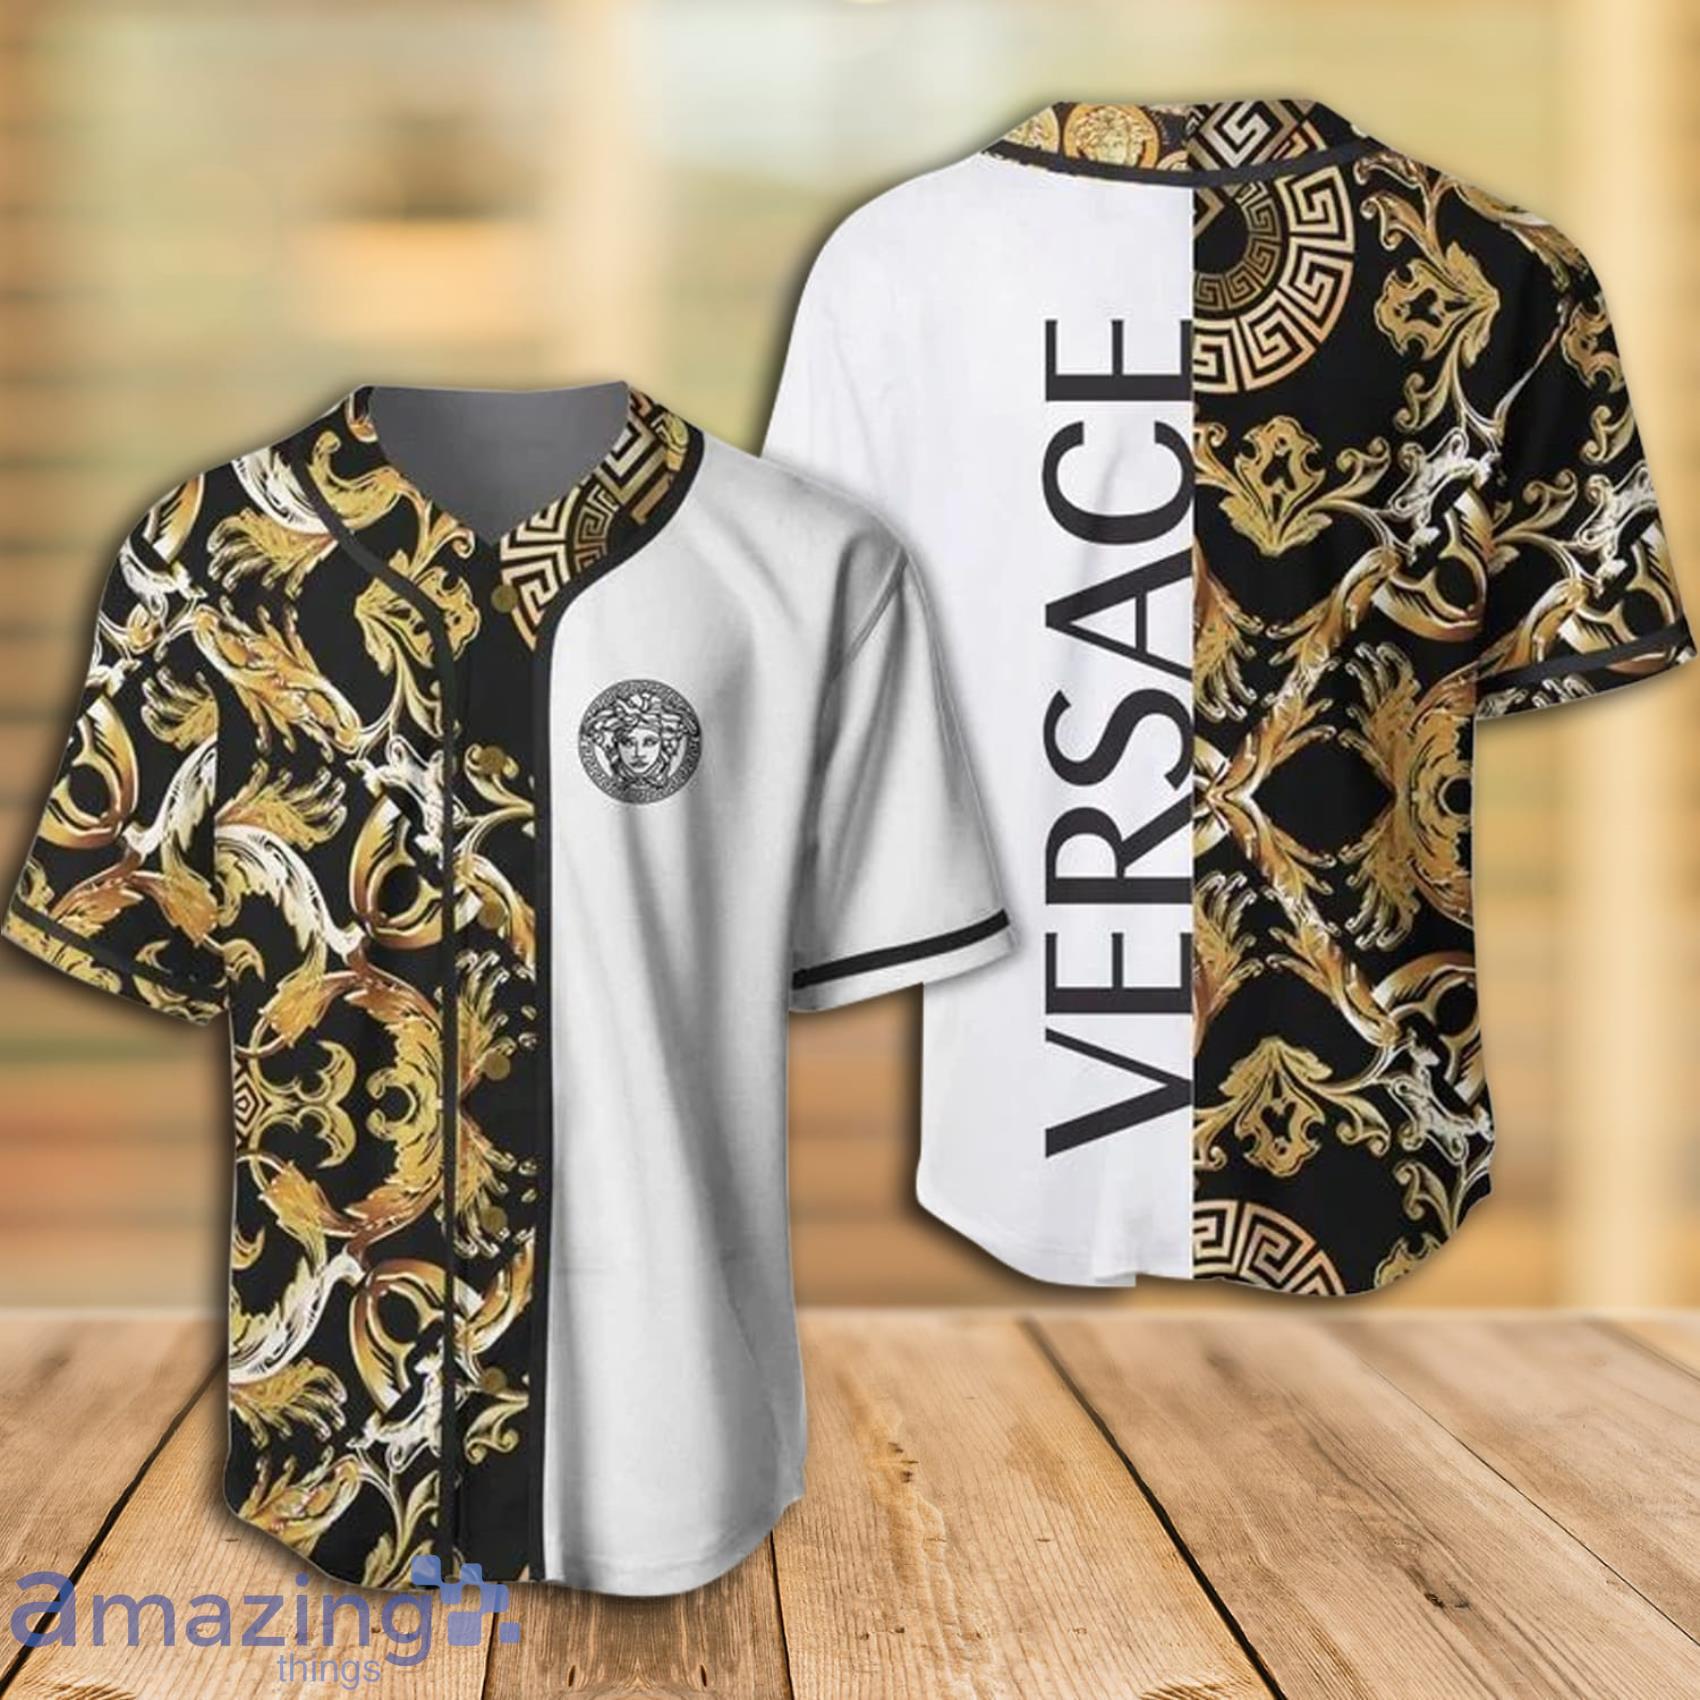 Gianni Versace Black Gold Baseball Jersey Clothes Sport For Men Women